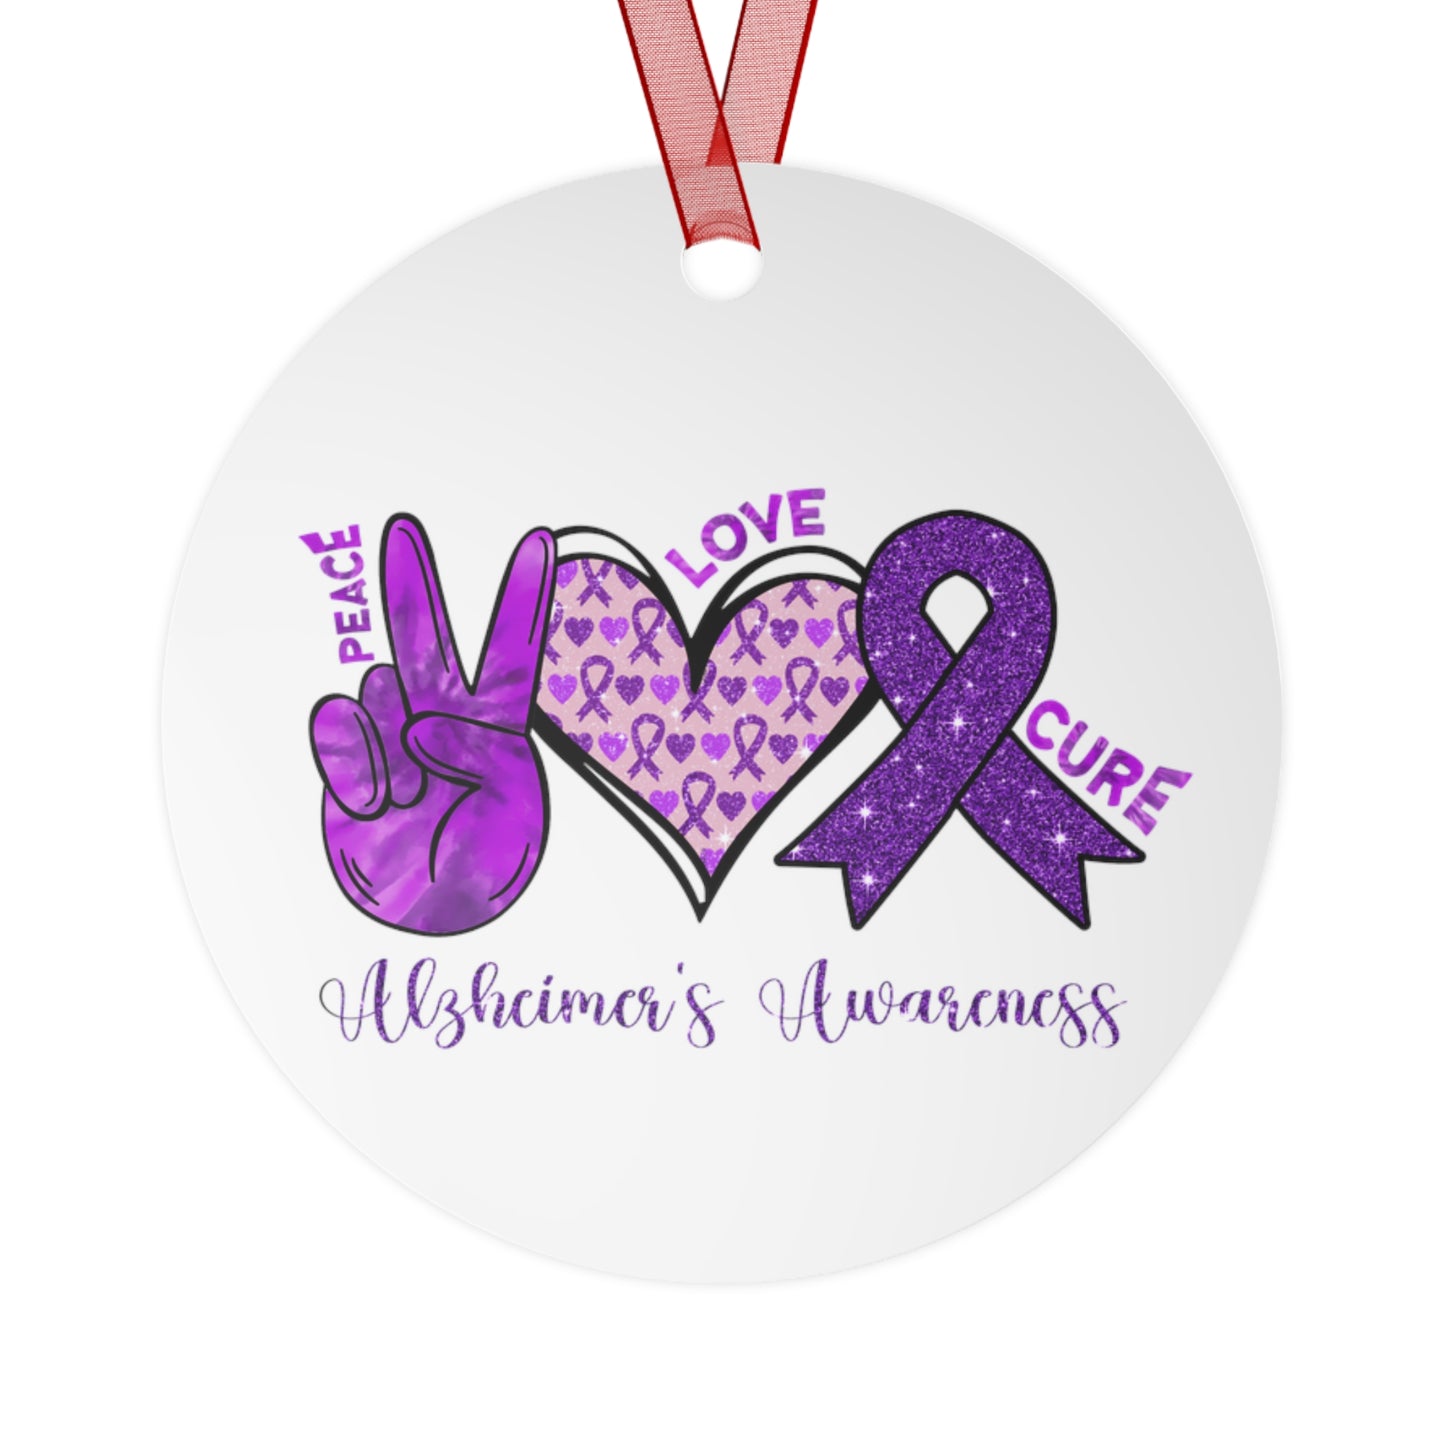 Alzheimer's Awareness Christmas Ornament Stocking Stuffer Christmas Gift, Holiday Home Decor, Wall Hanging, Support